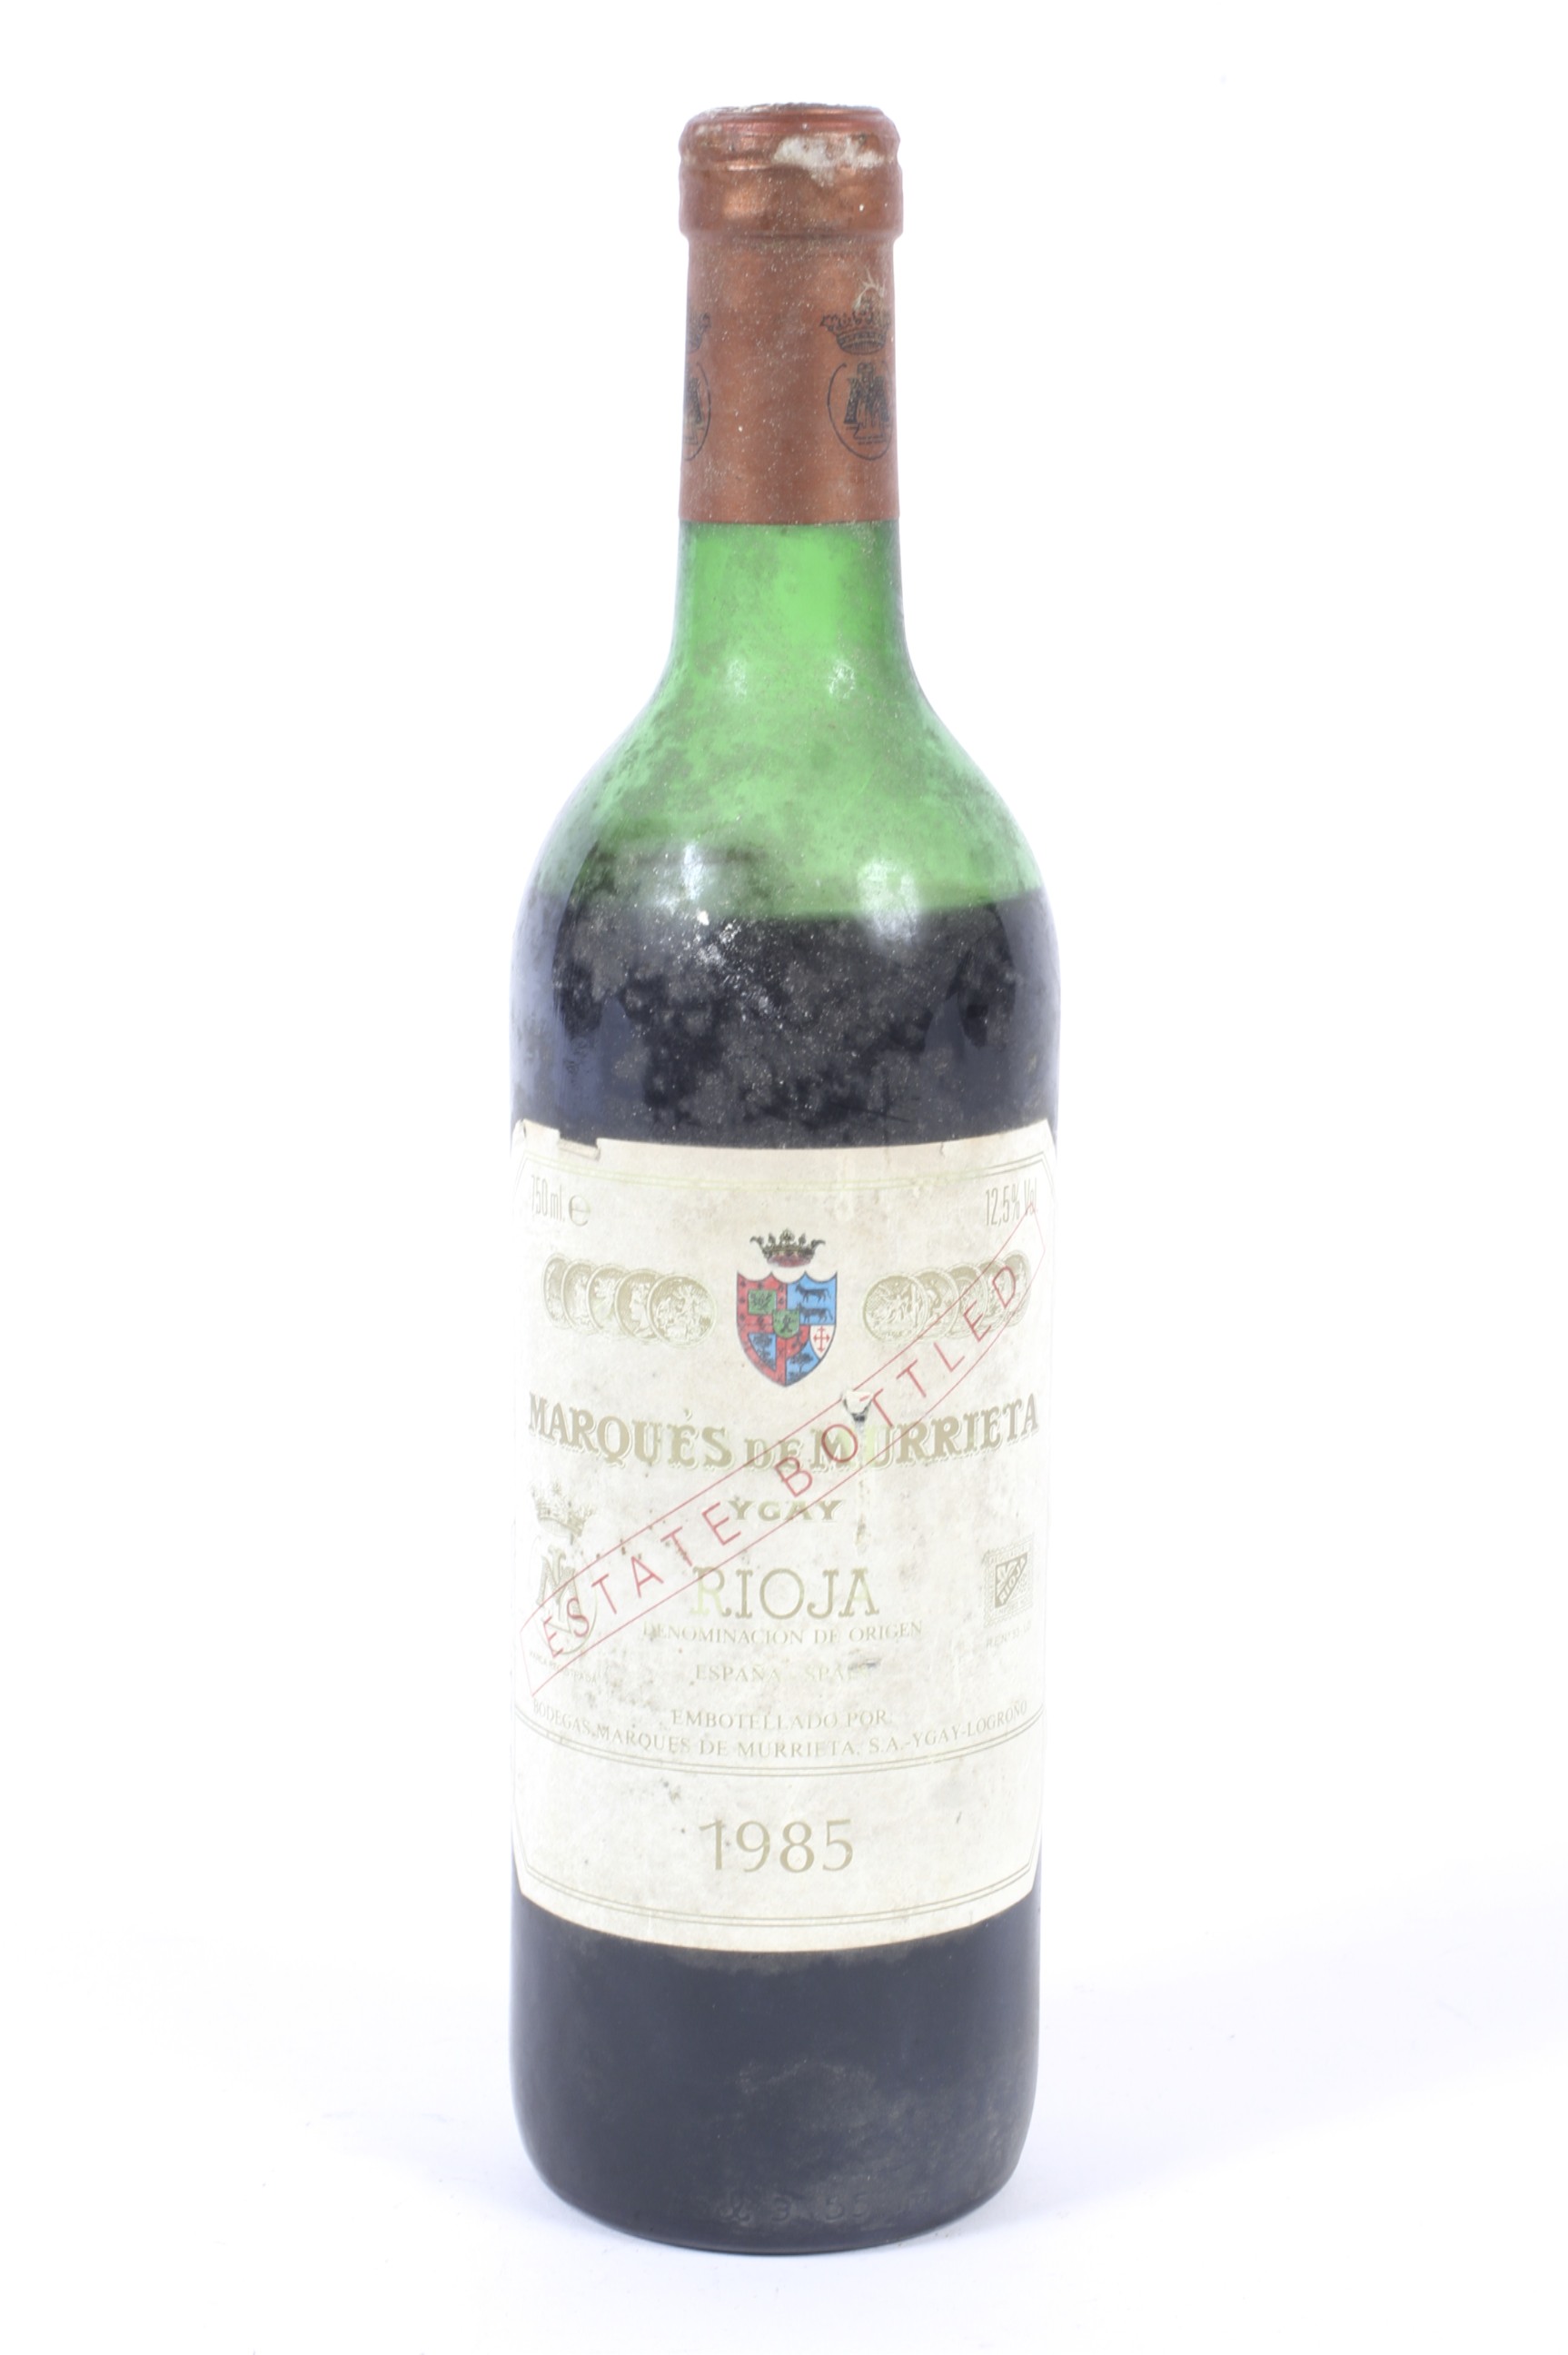 A bottle of Marques de Murrieta Rioja 1985. Estate bottled, 75cl, 12.5% vol. - Image 2 of 2